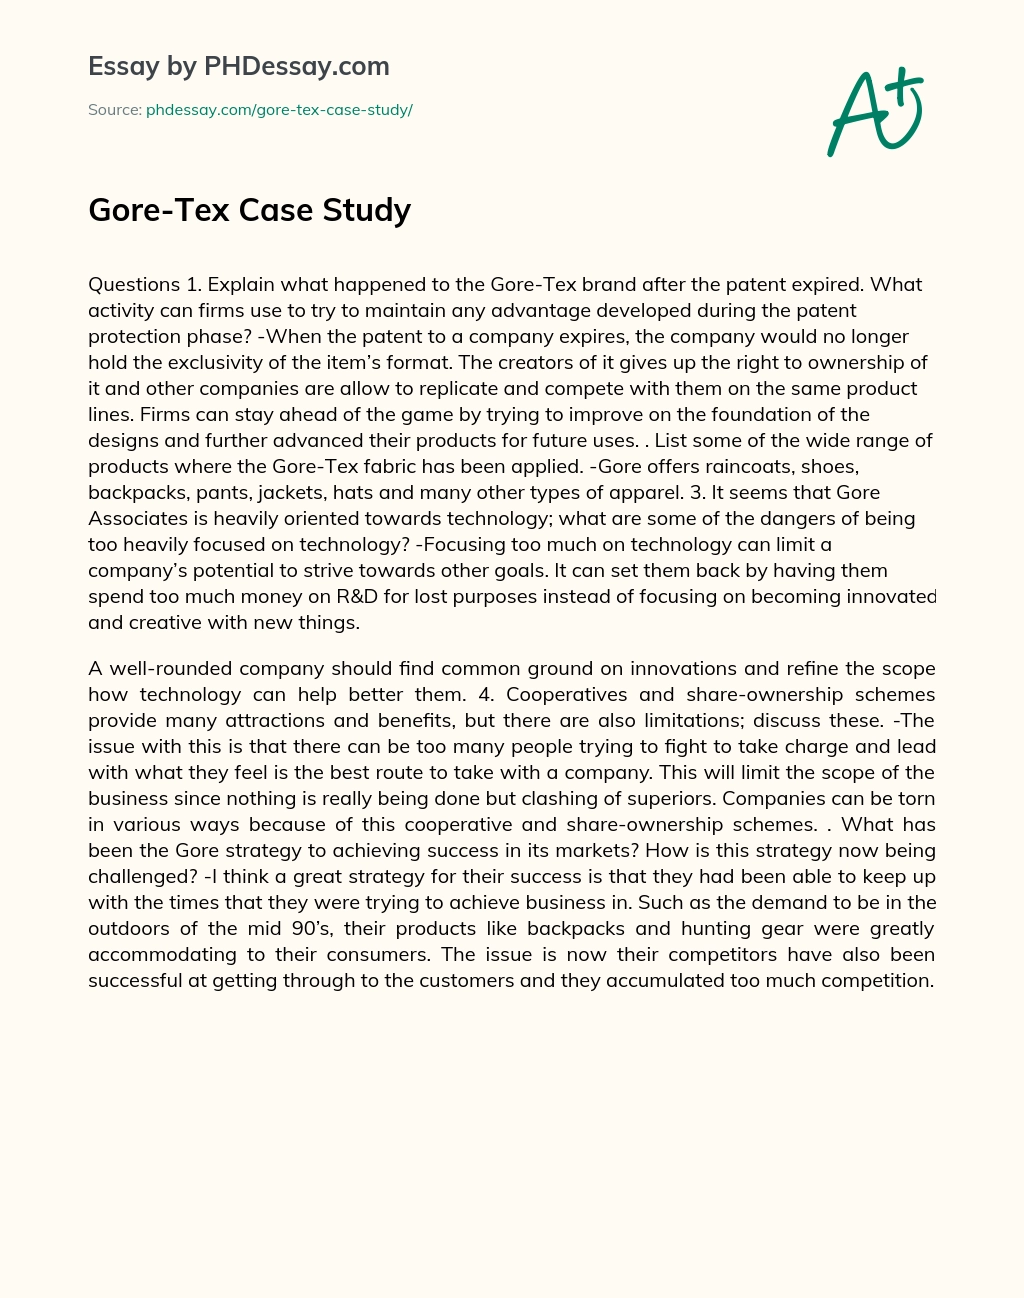 Gore-Tex Case Study essay